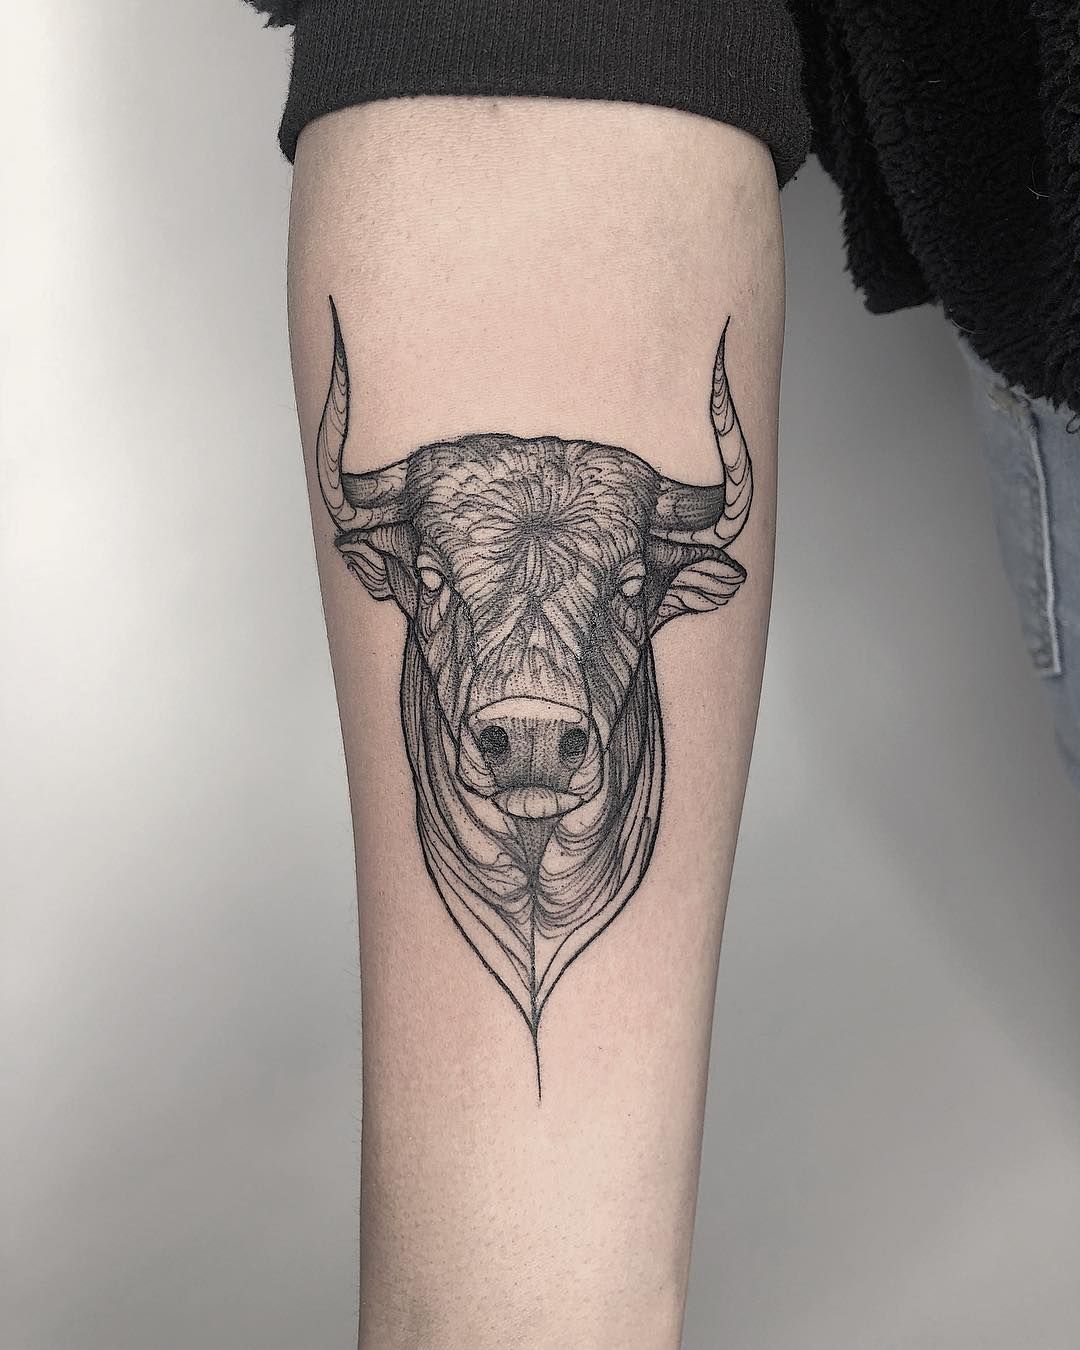 Small Simple Bull Tattoo Designs (25)